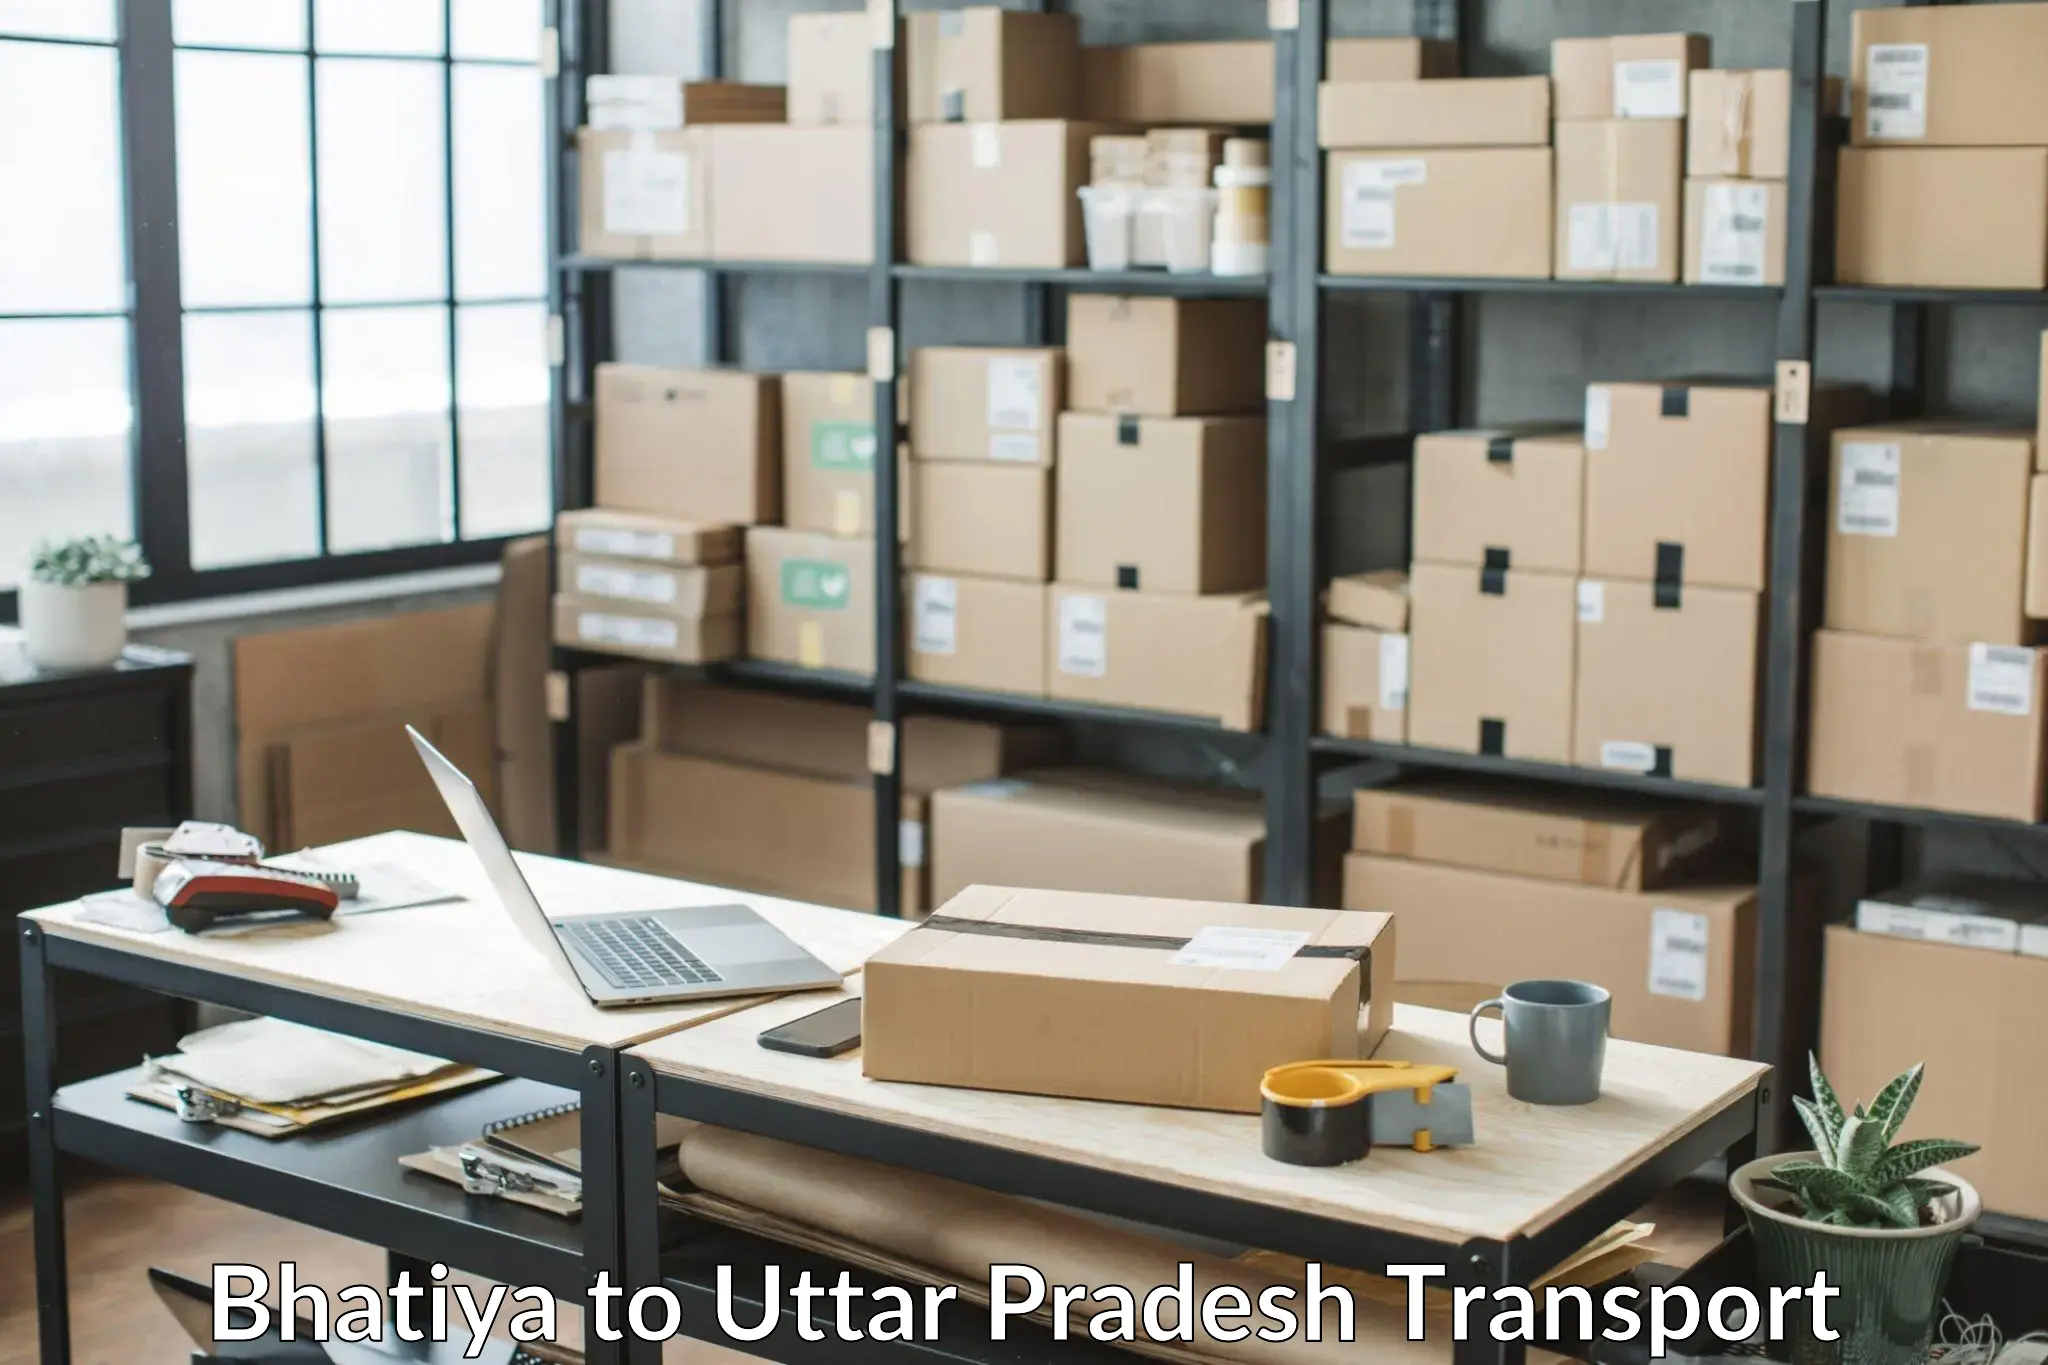 Truck transport companies in India Bhatiya to Uttar Pradesh